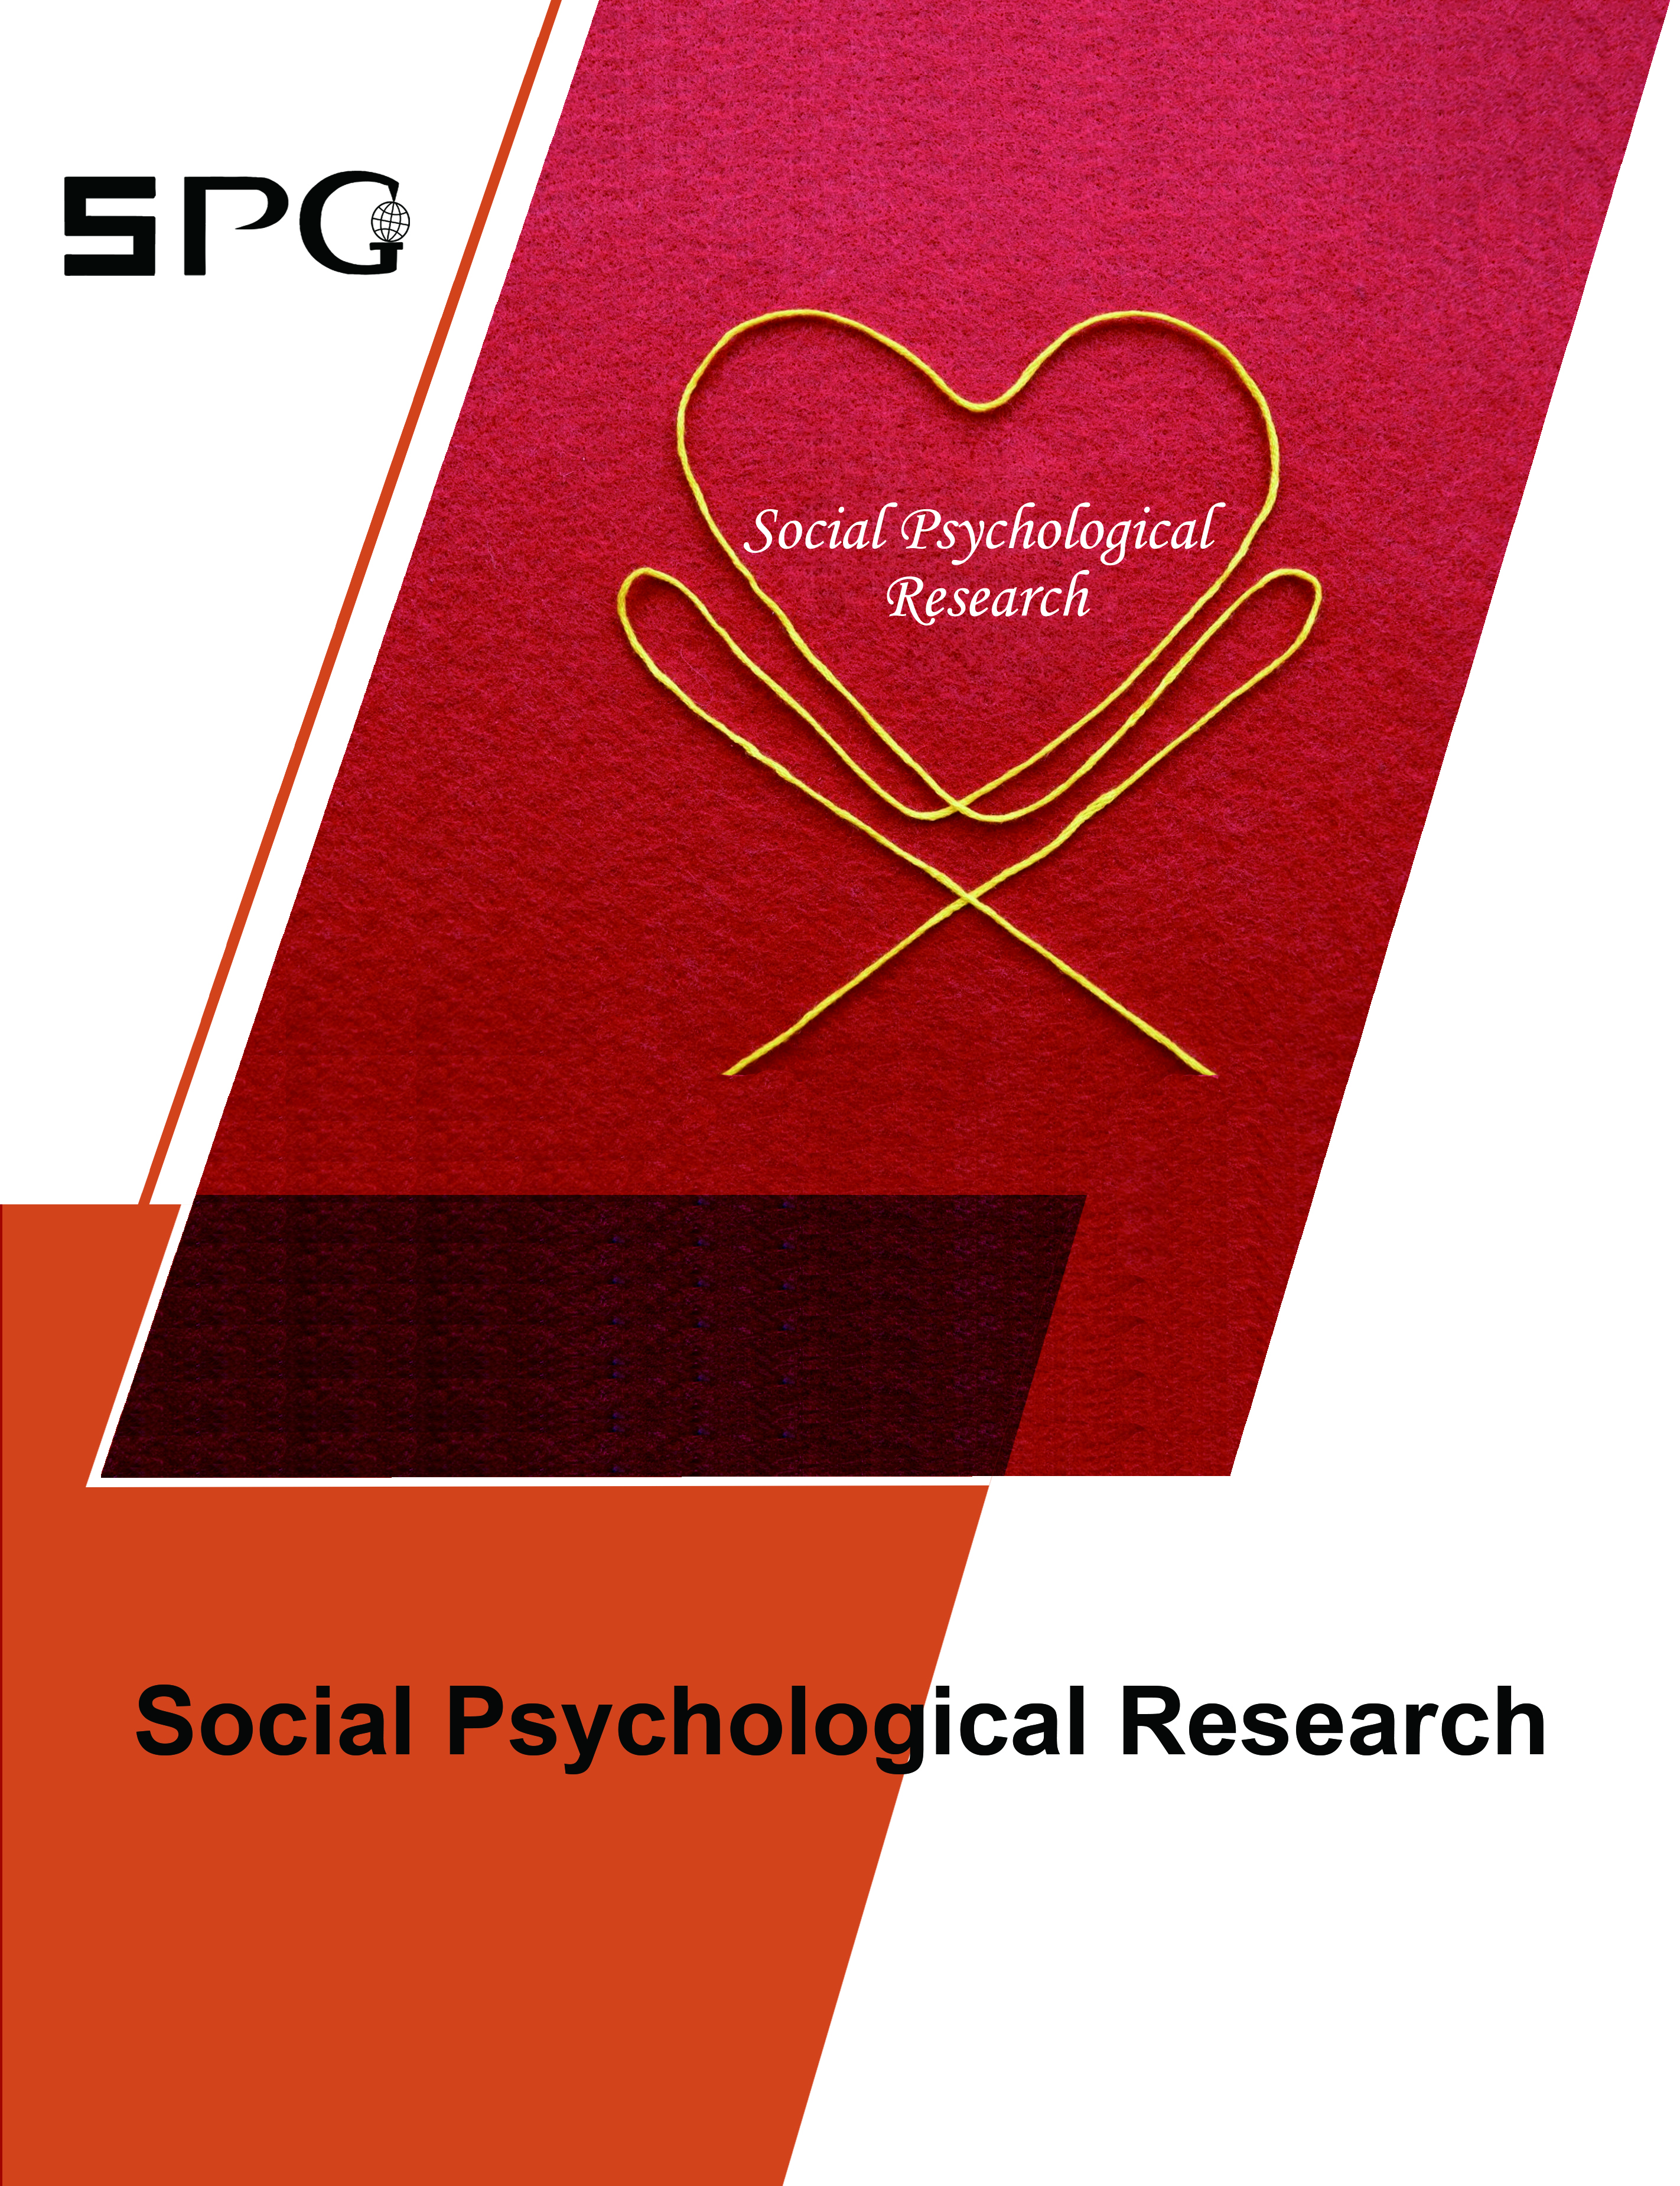 Social Psychological Research | Scholar Publishing Group